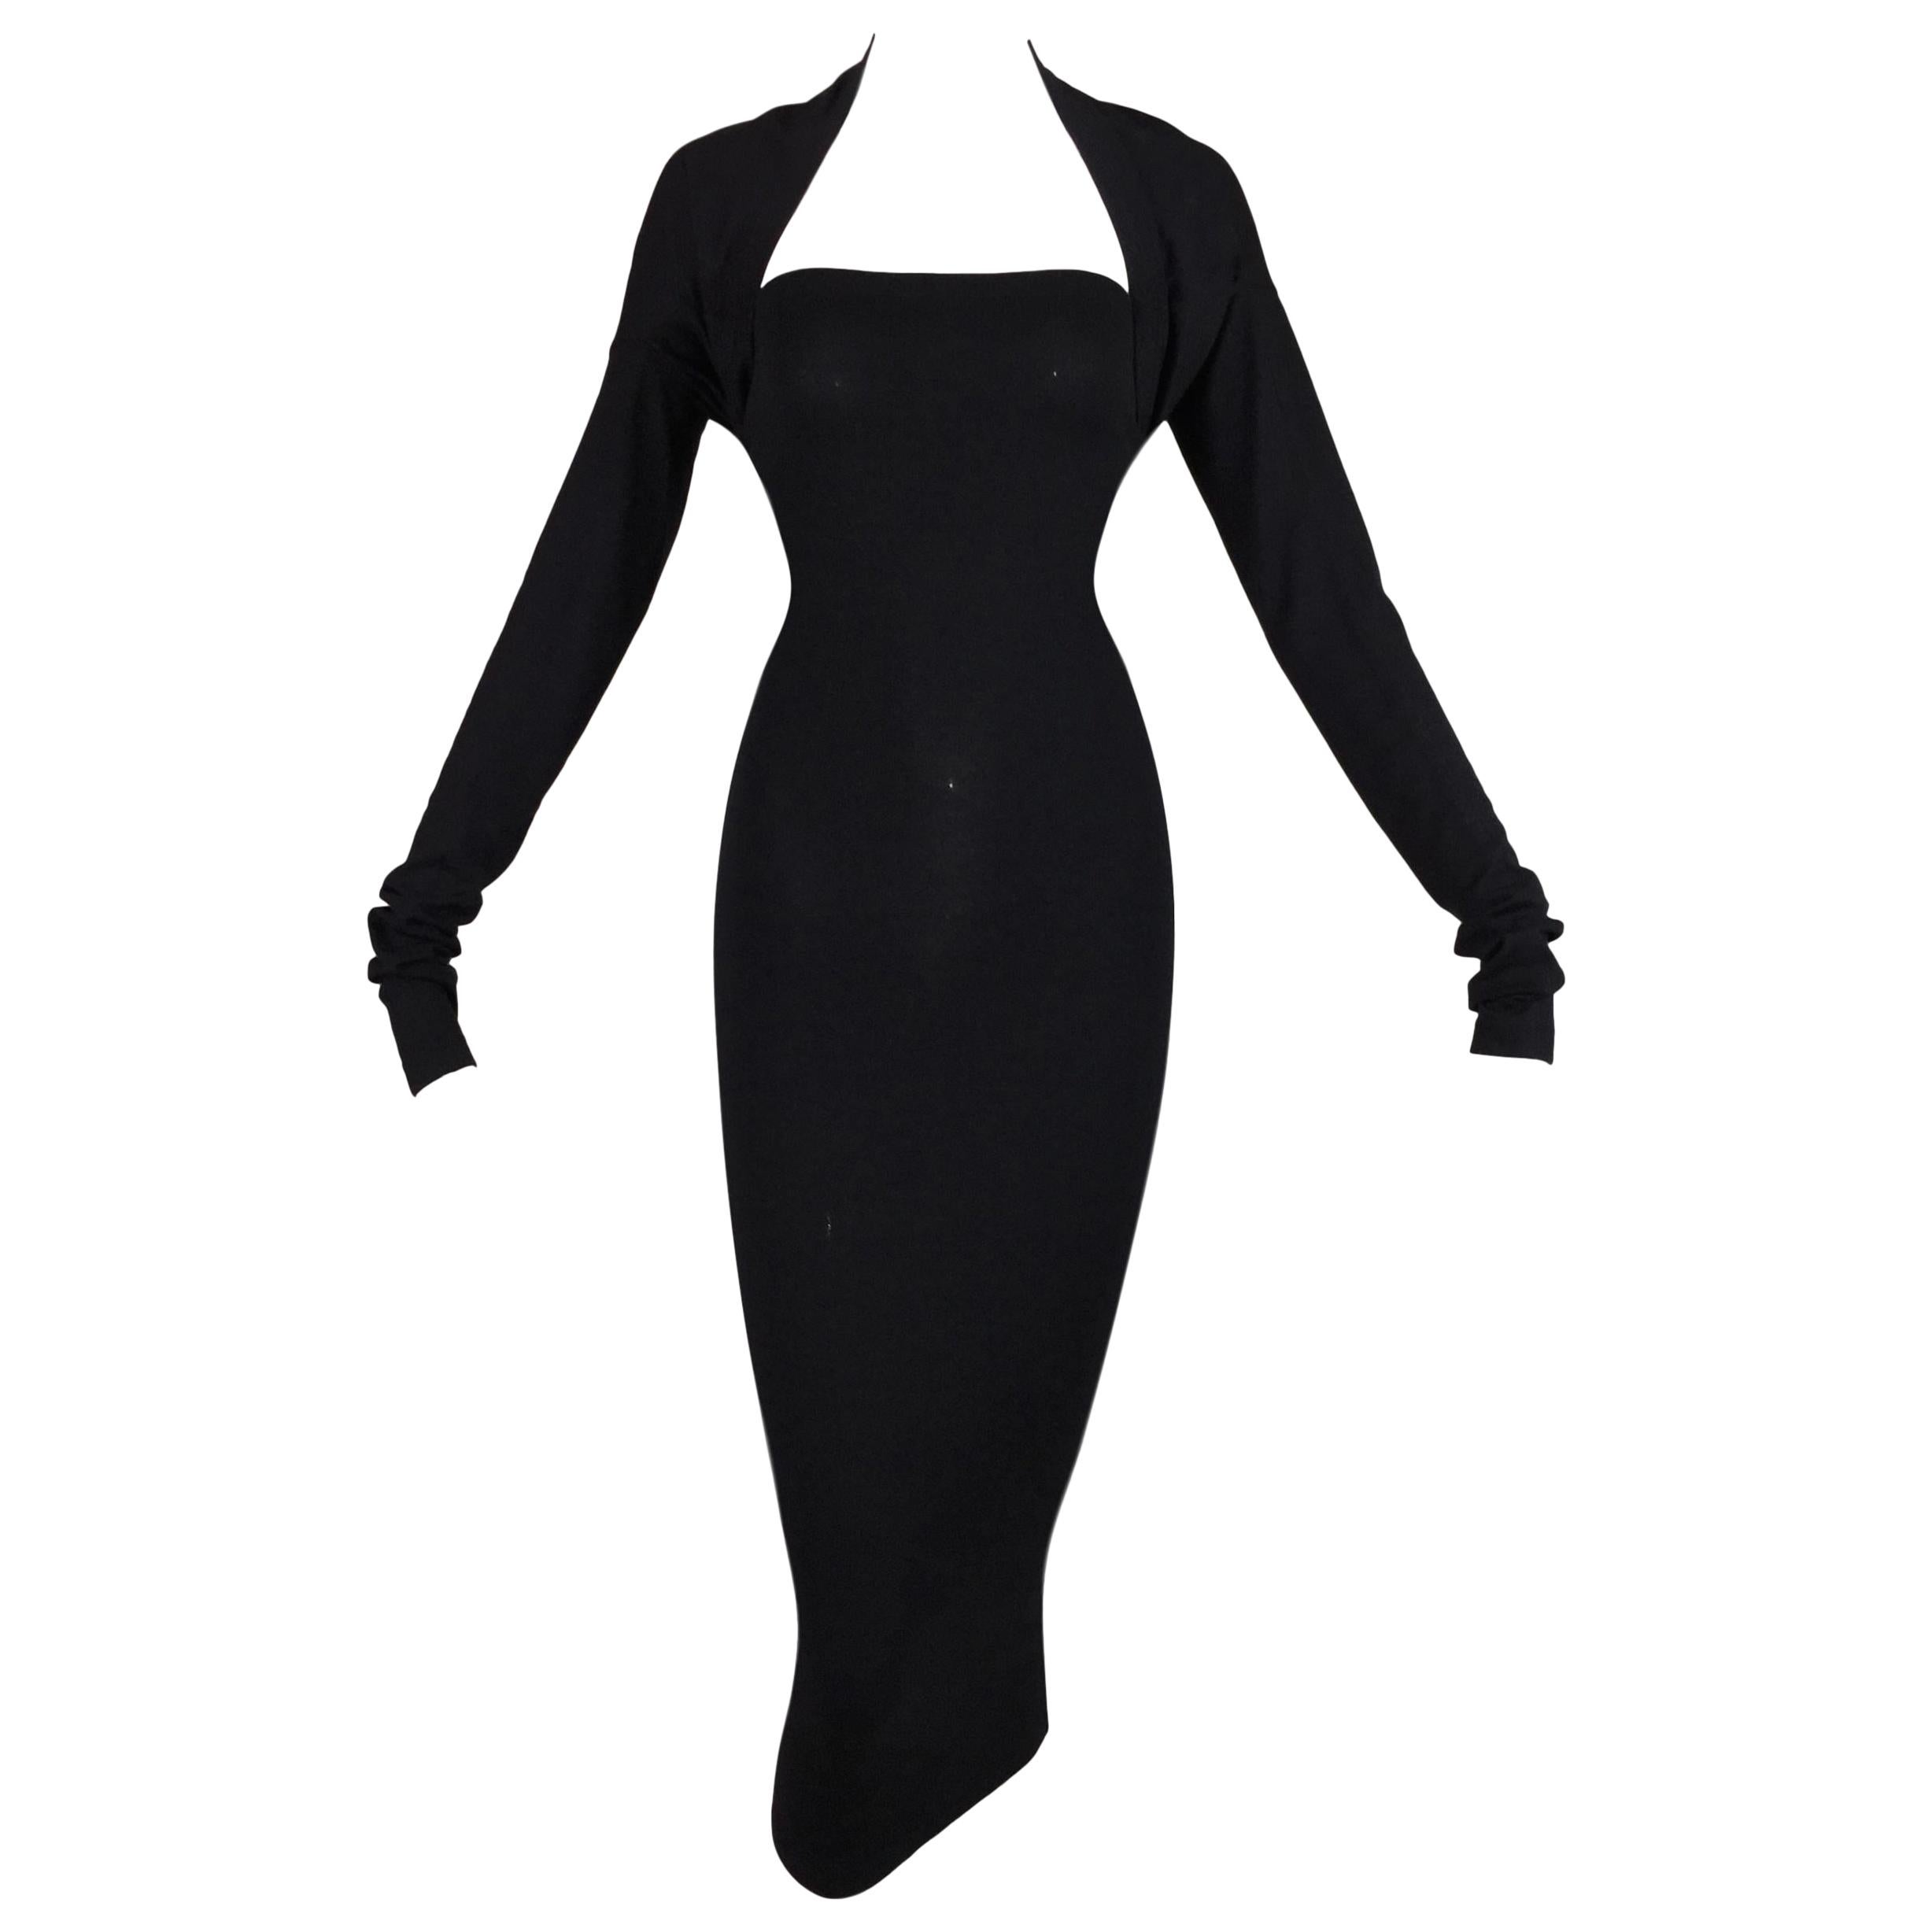 S/S 2003 Dolce & Gabbana Limited "Vintage" Edition Black Strapless Dress & Shrug